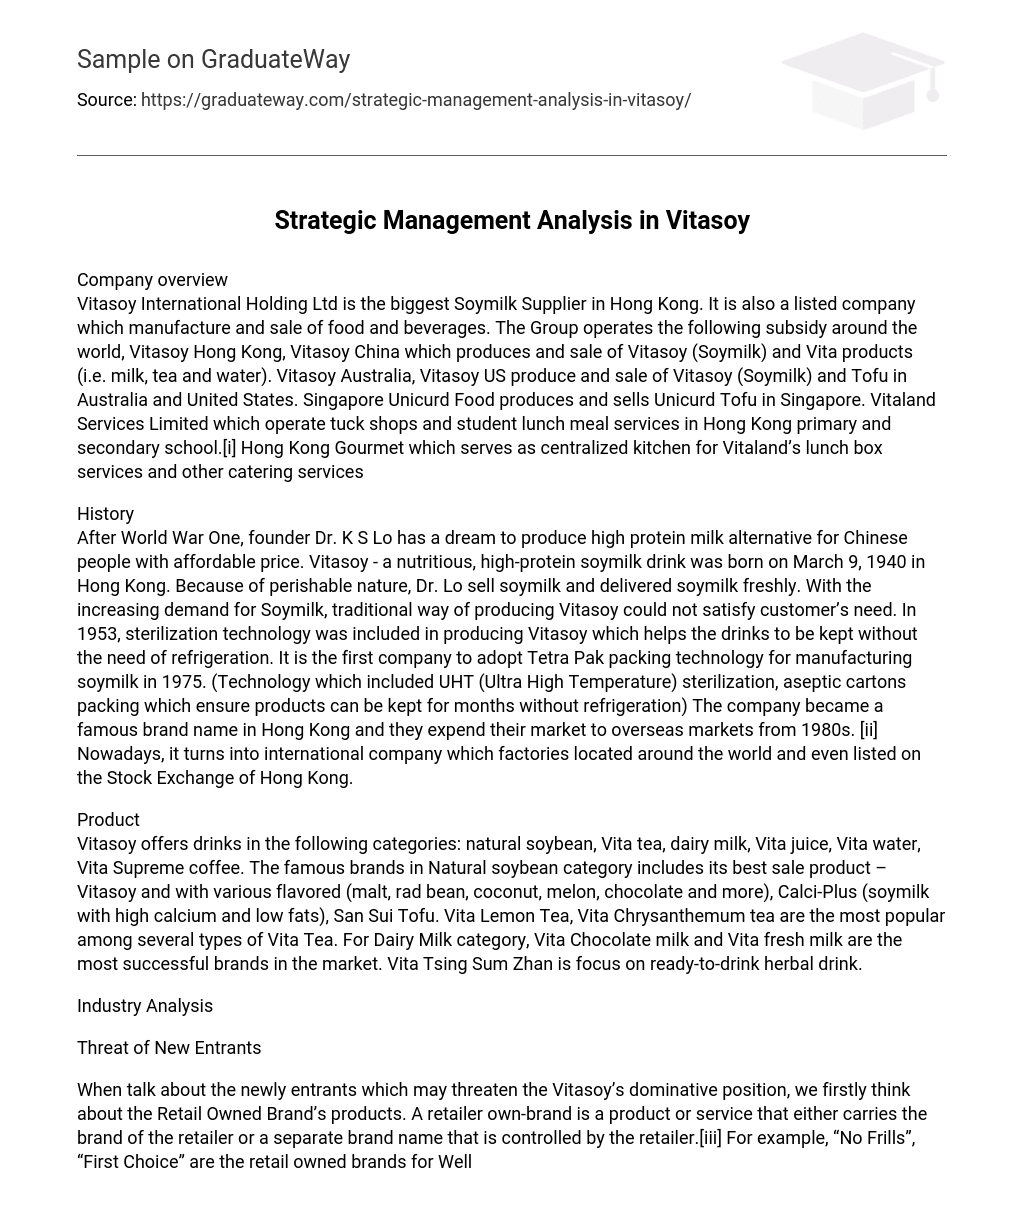 Strategic Management Analysis in Vitasoy